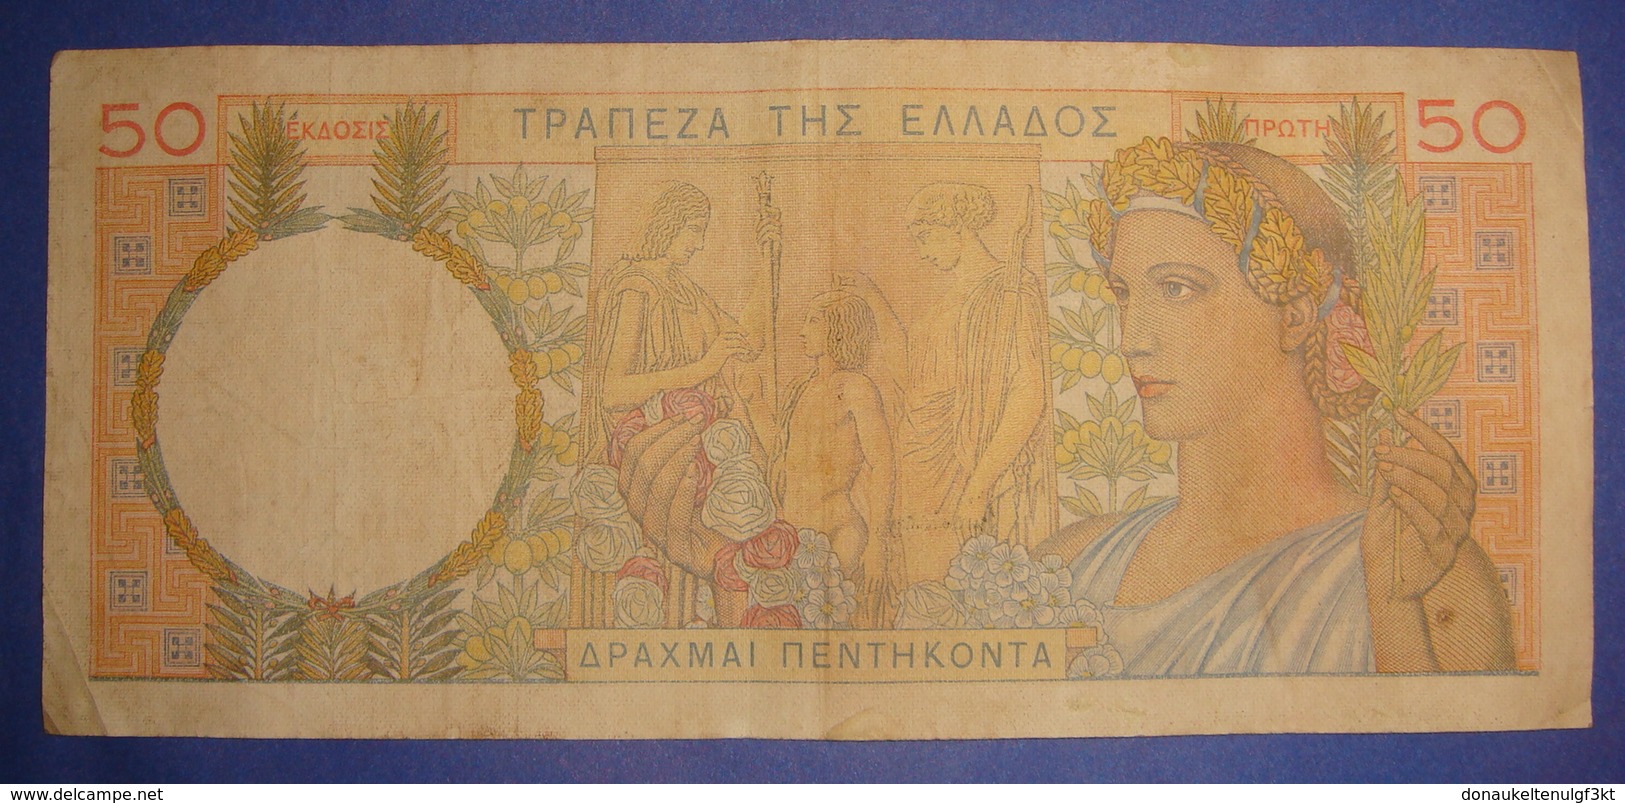 GREECE 50 DRACHMAI, 1935 VF, FRENCH PRINTING Serial # AT 014 - 696489 - Grecia